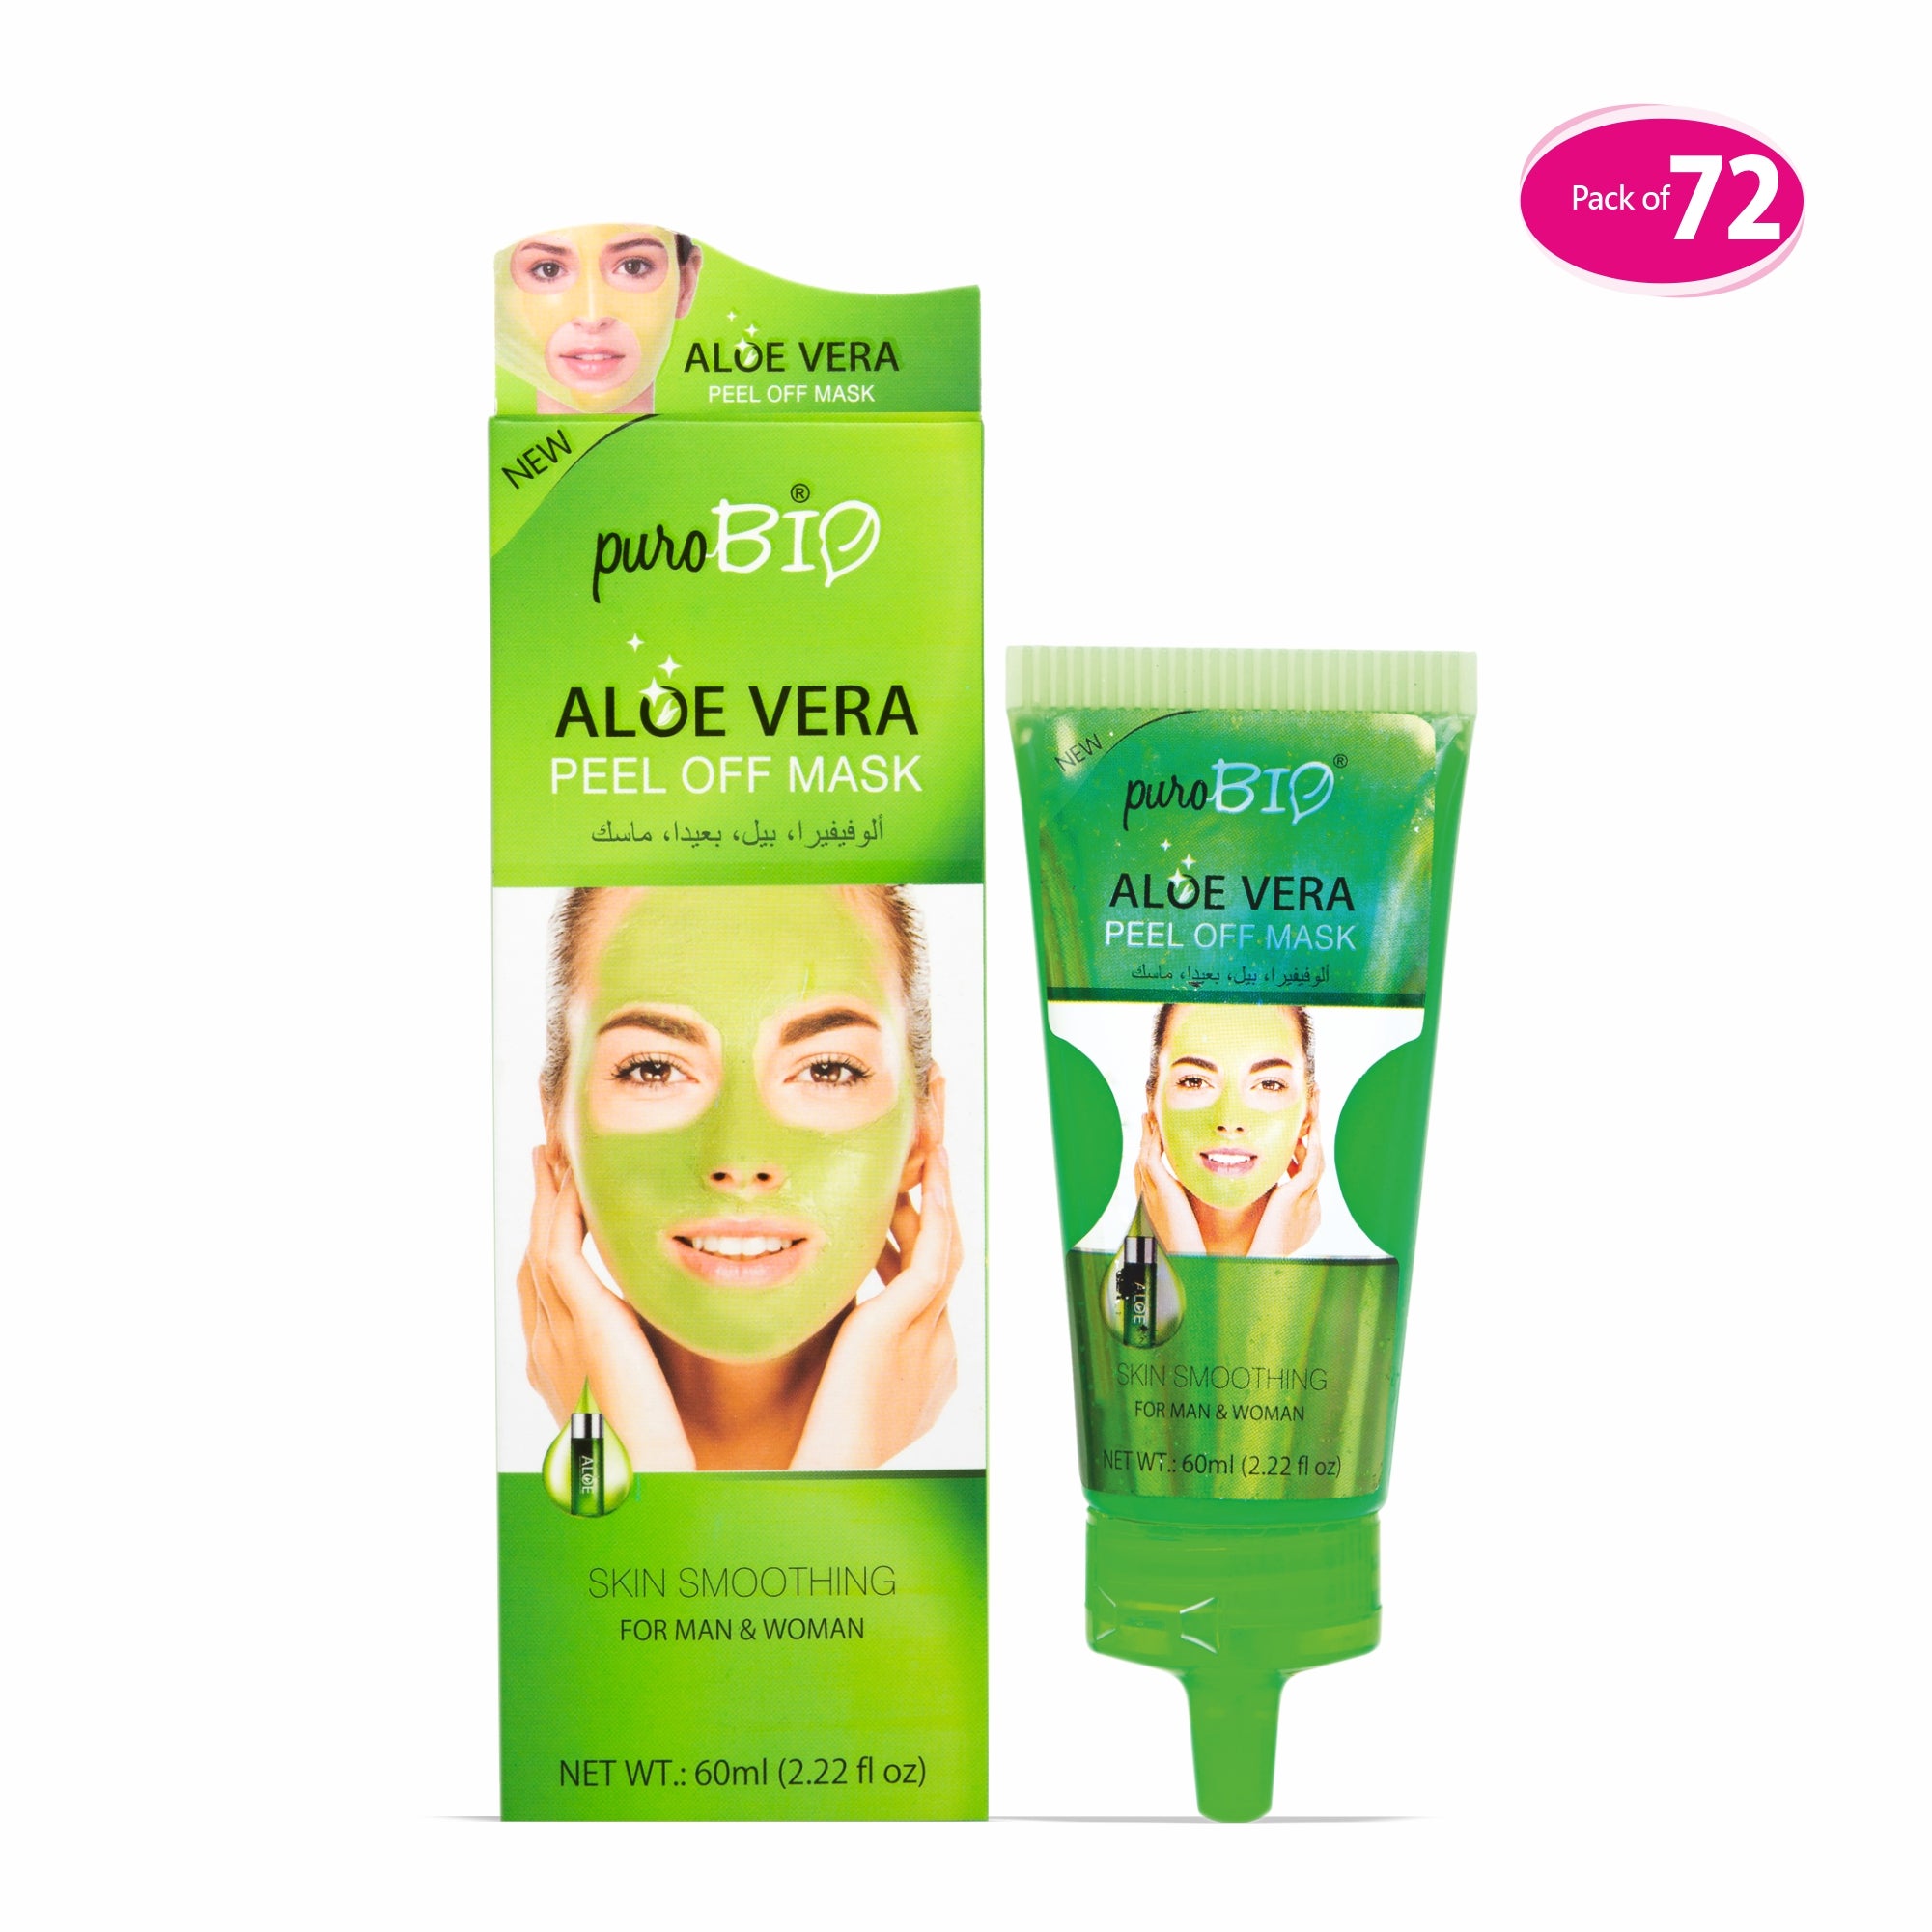 Aloe Vera Peel off Facial Mask in bulk 72 quantity